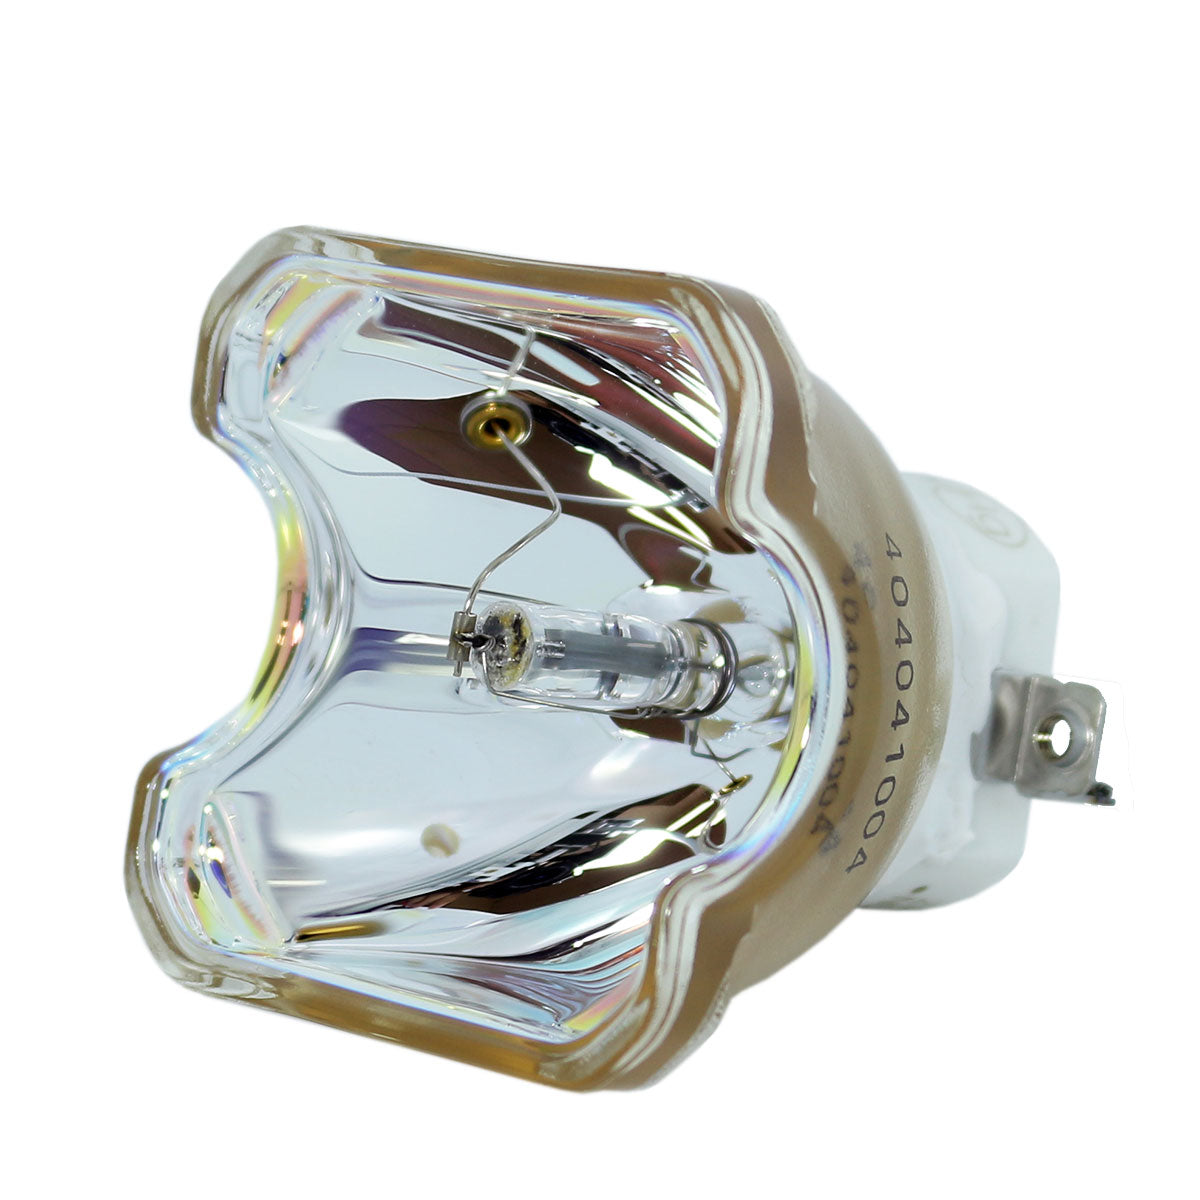 Ushio NSHA230L Ushio Projector Bare Lamp